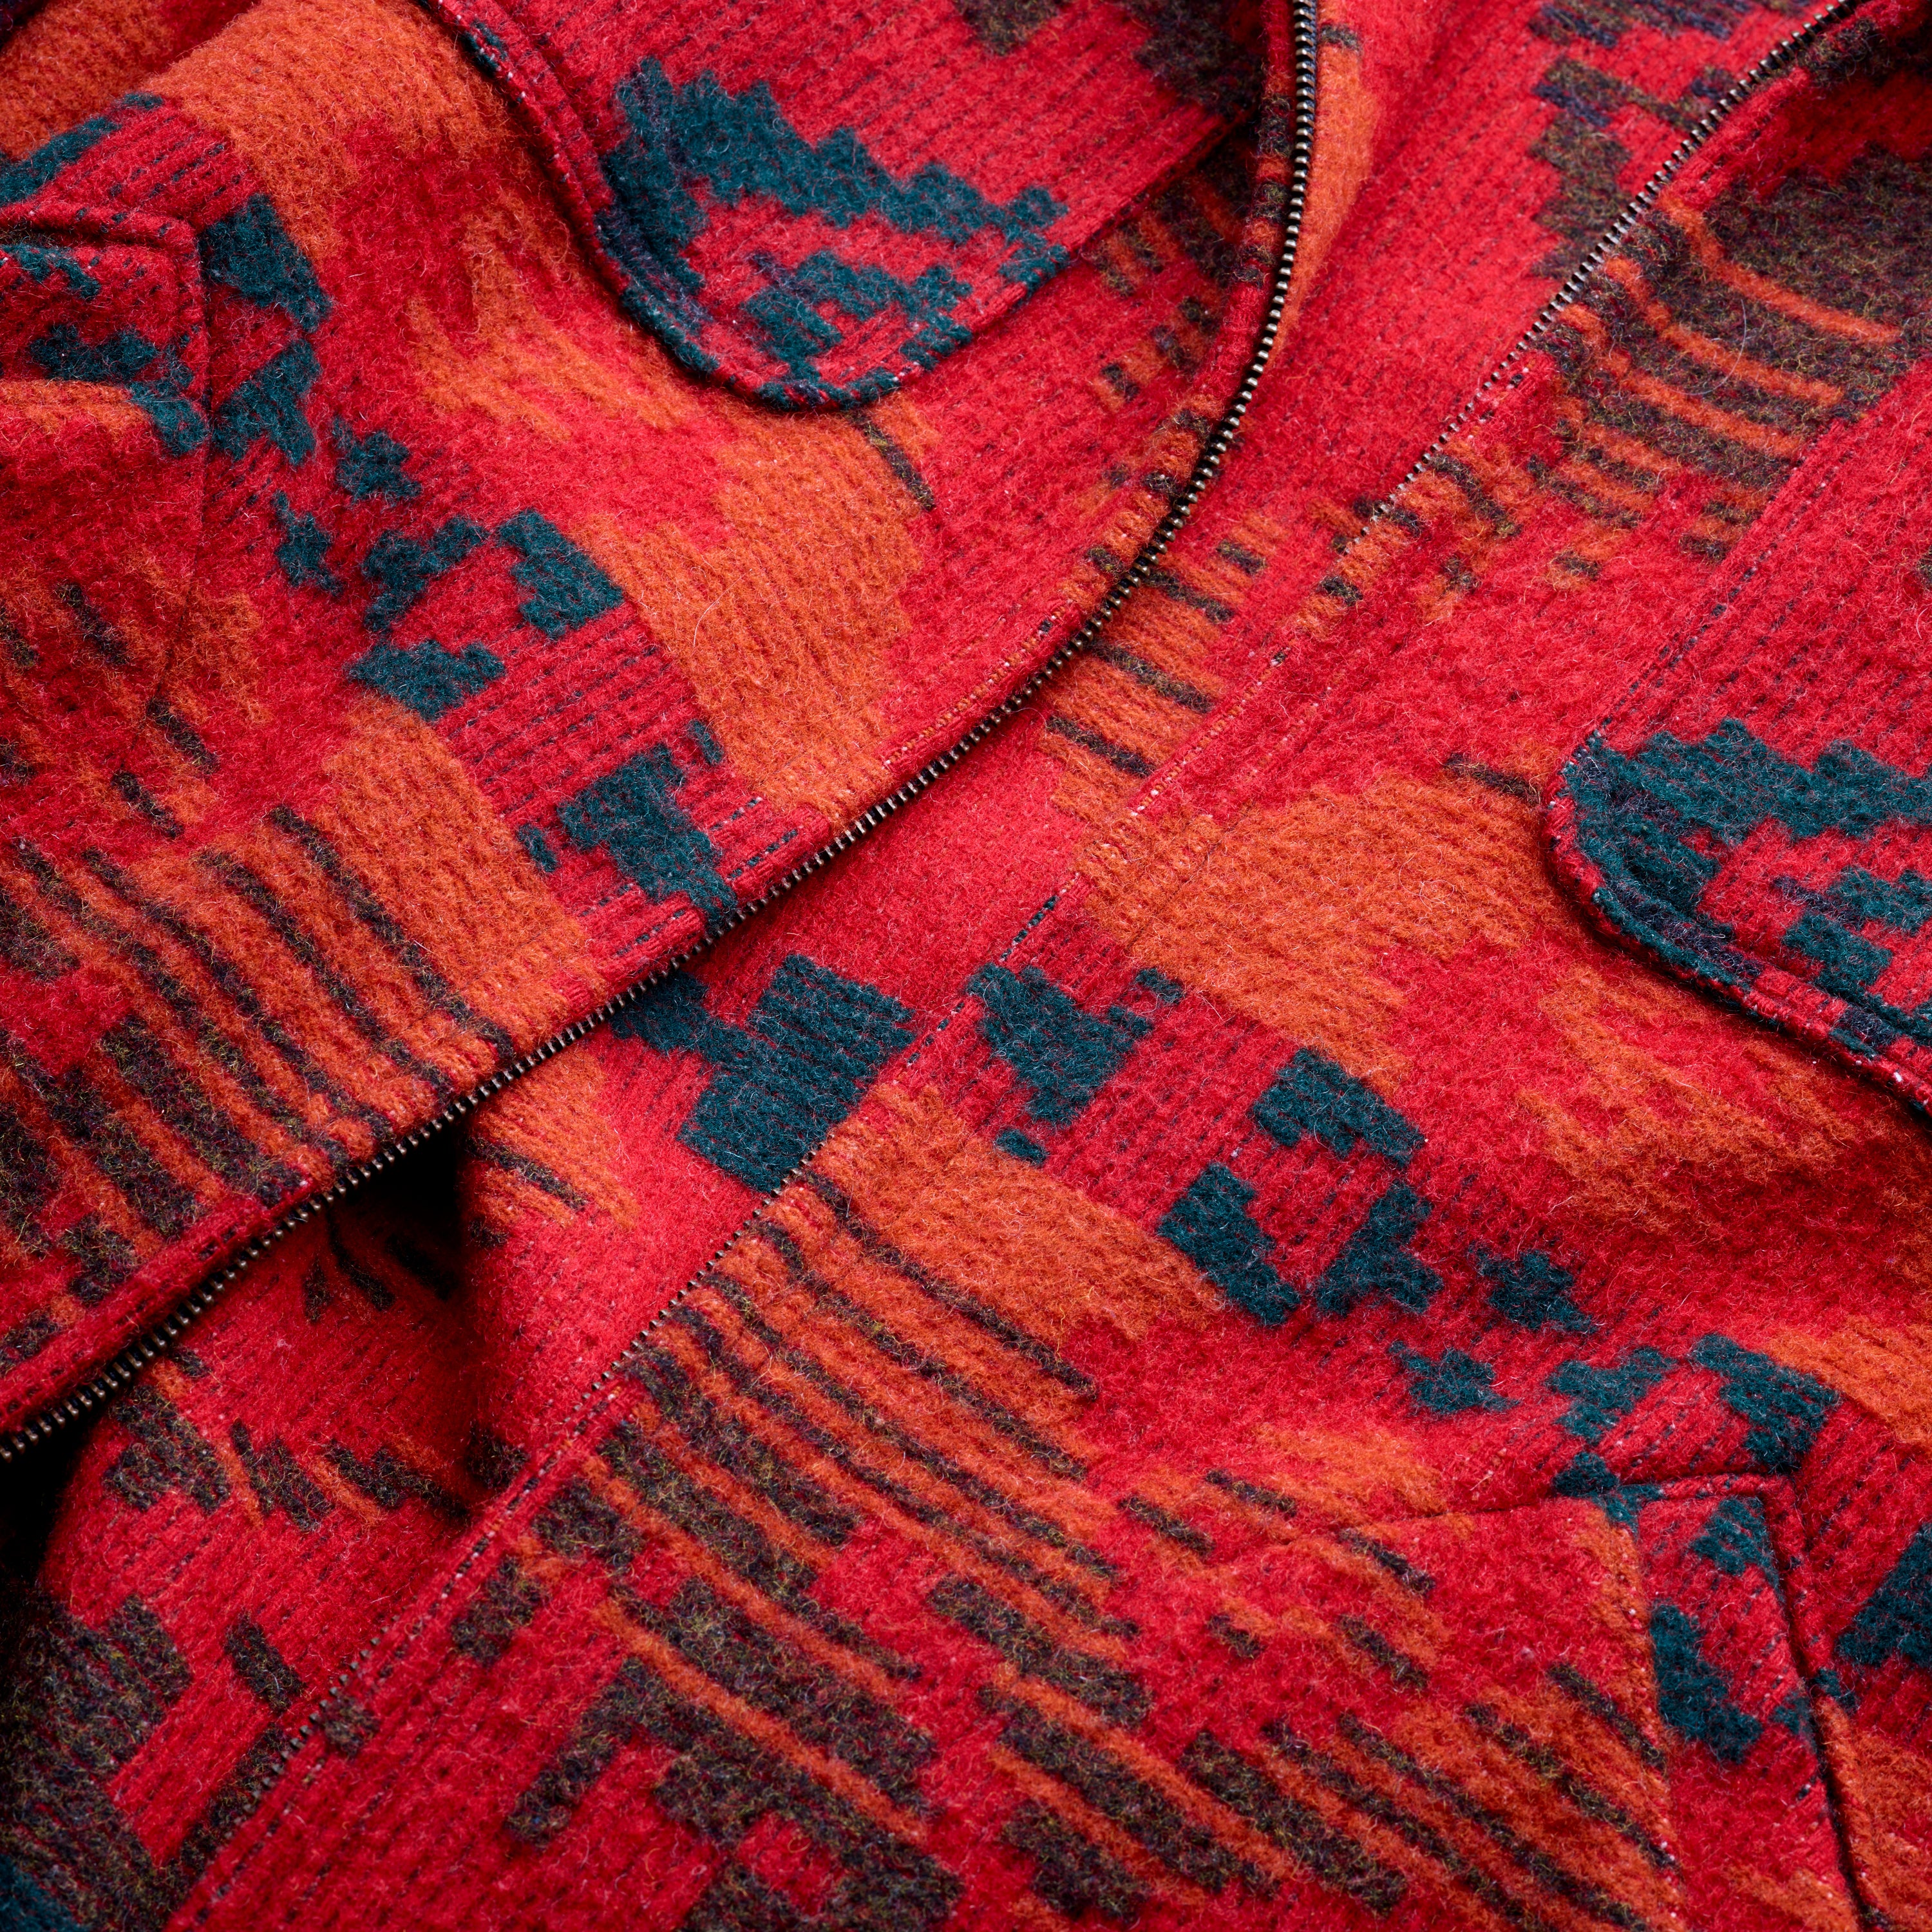 The Woolrich Blanket Jacket